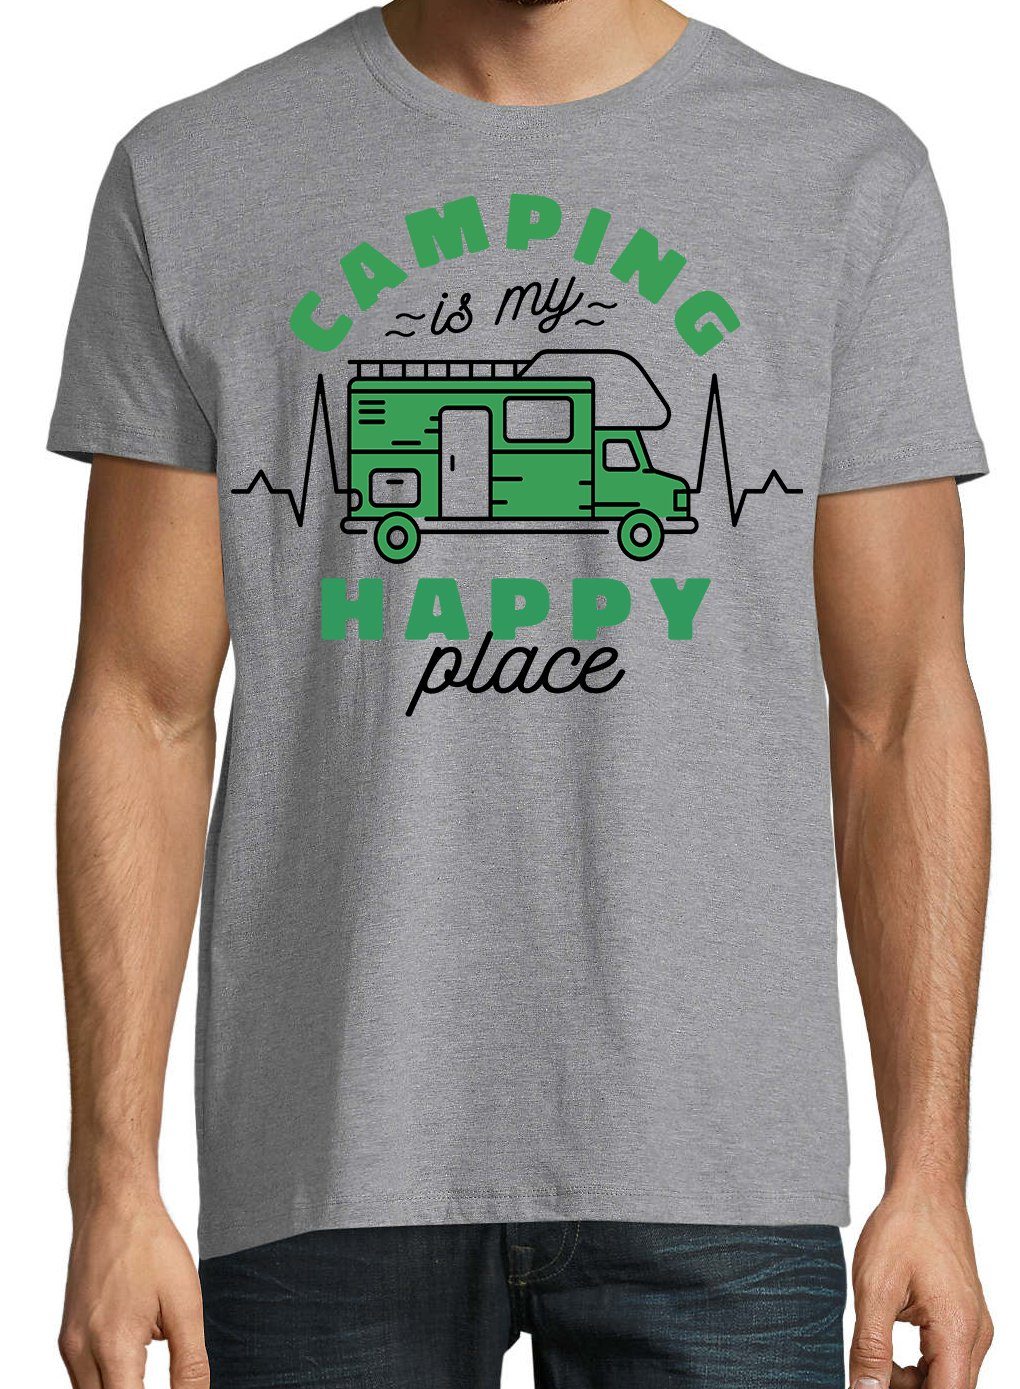 T-Shirt Designz Happy Motiv is Youth Camping Place my mit Grau trendigem